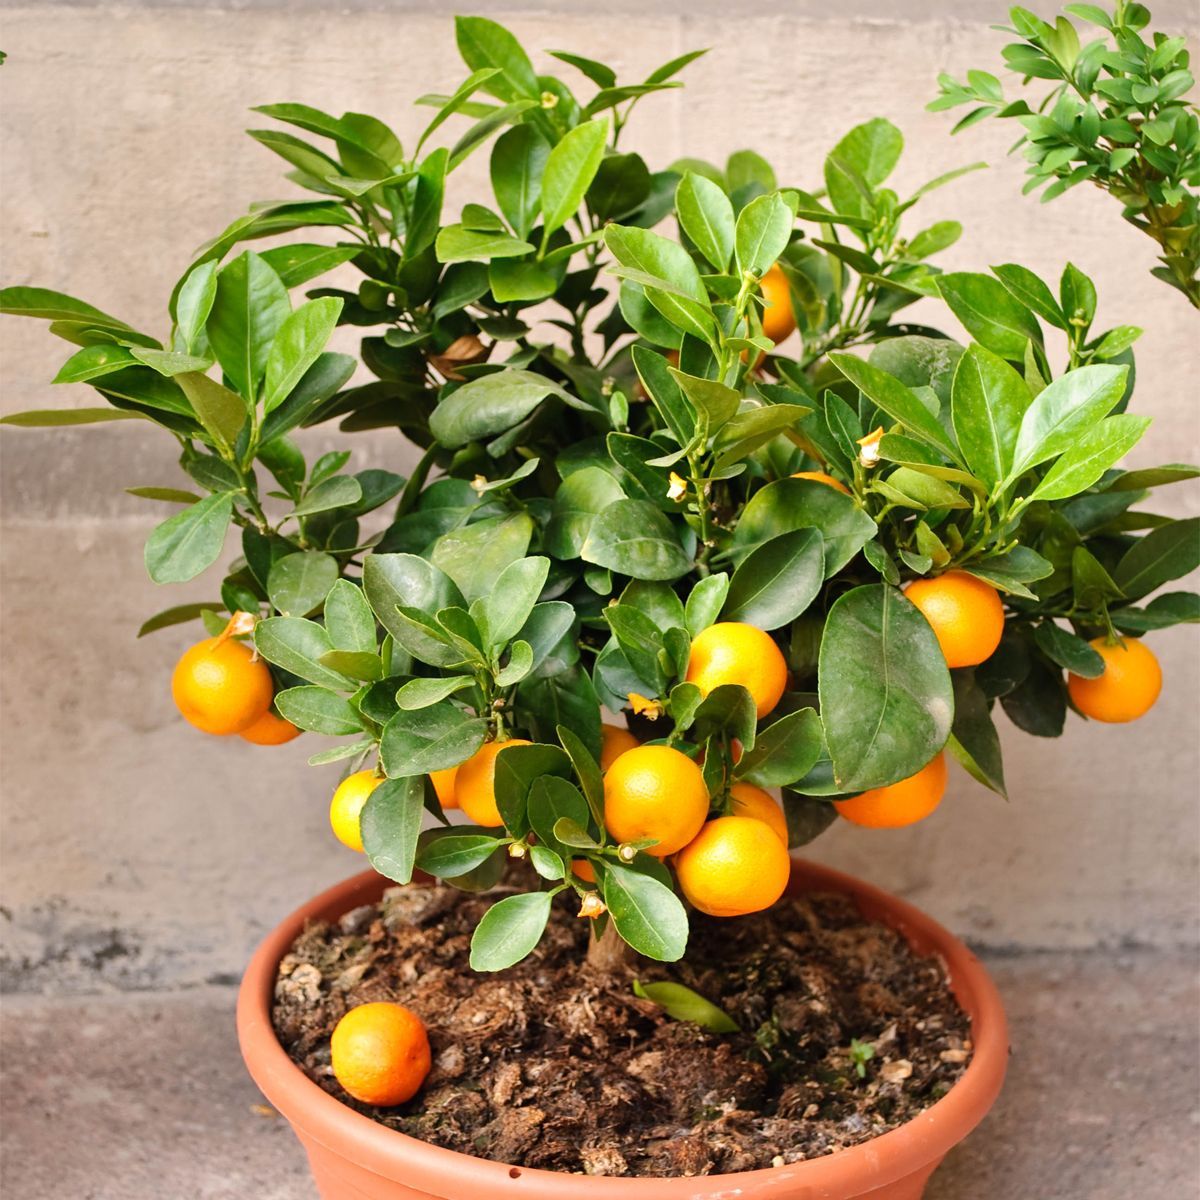 tangerine fruit in chinese